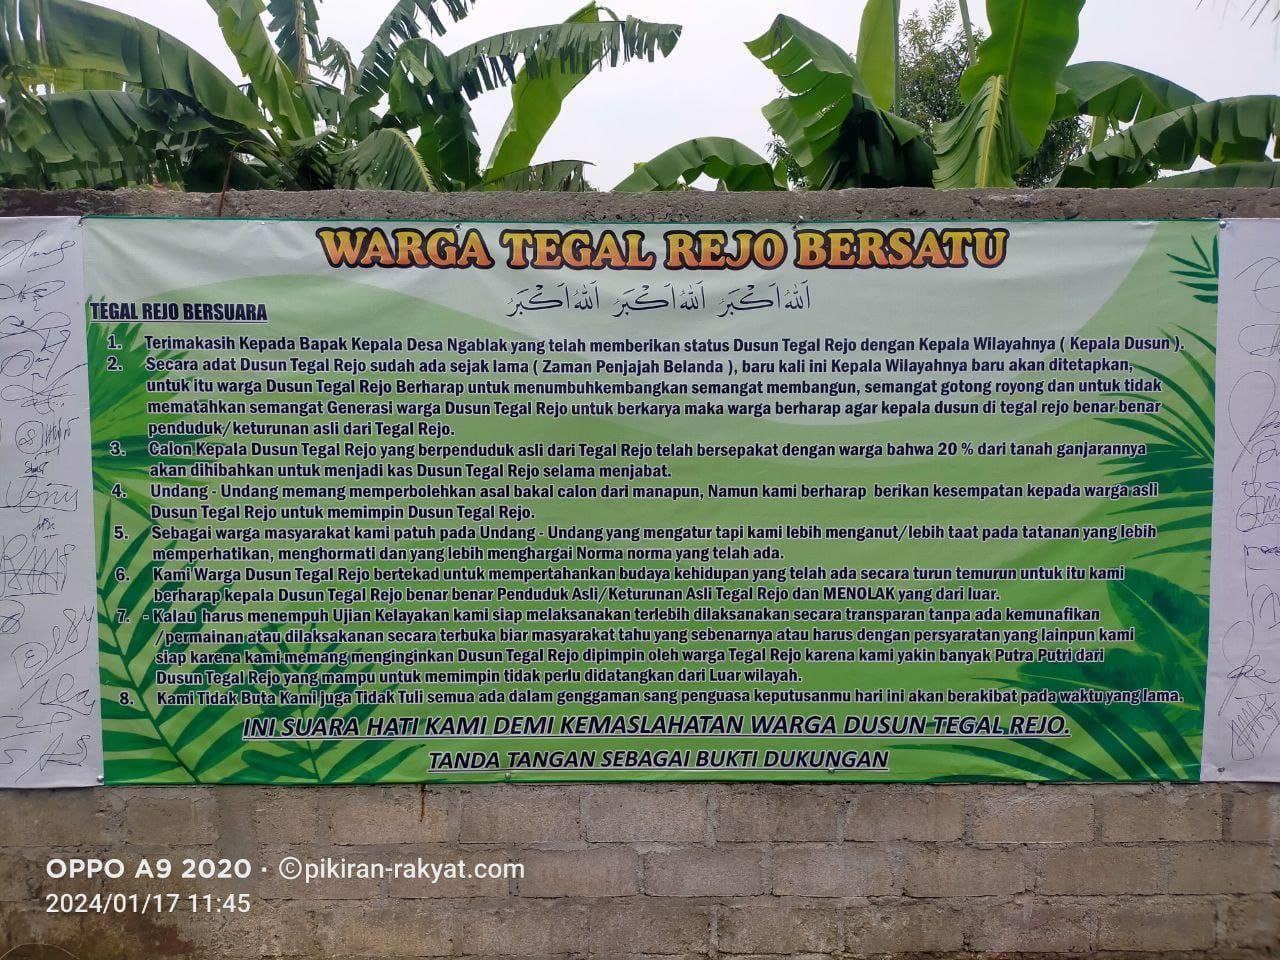 Foto. Baliho pernyataan tegas Warga Dusun Tegalrejo, Desa Ngablak - Kabupaten Kediri menolak Kepala Dusun yang baru